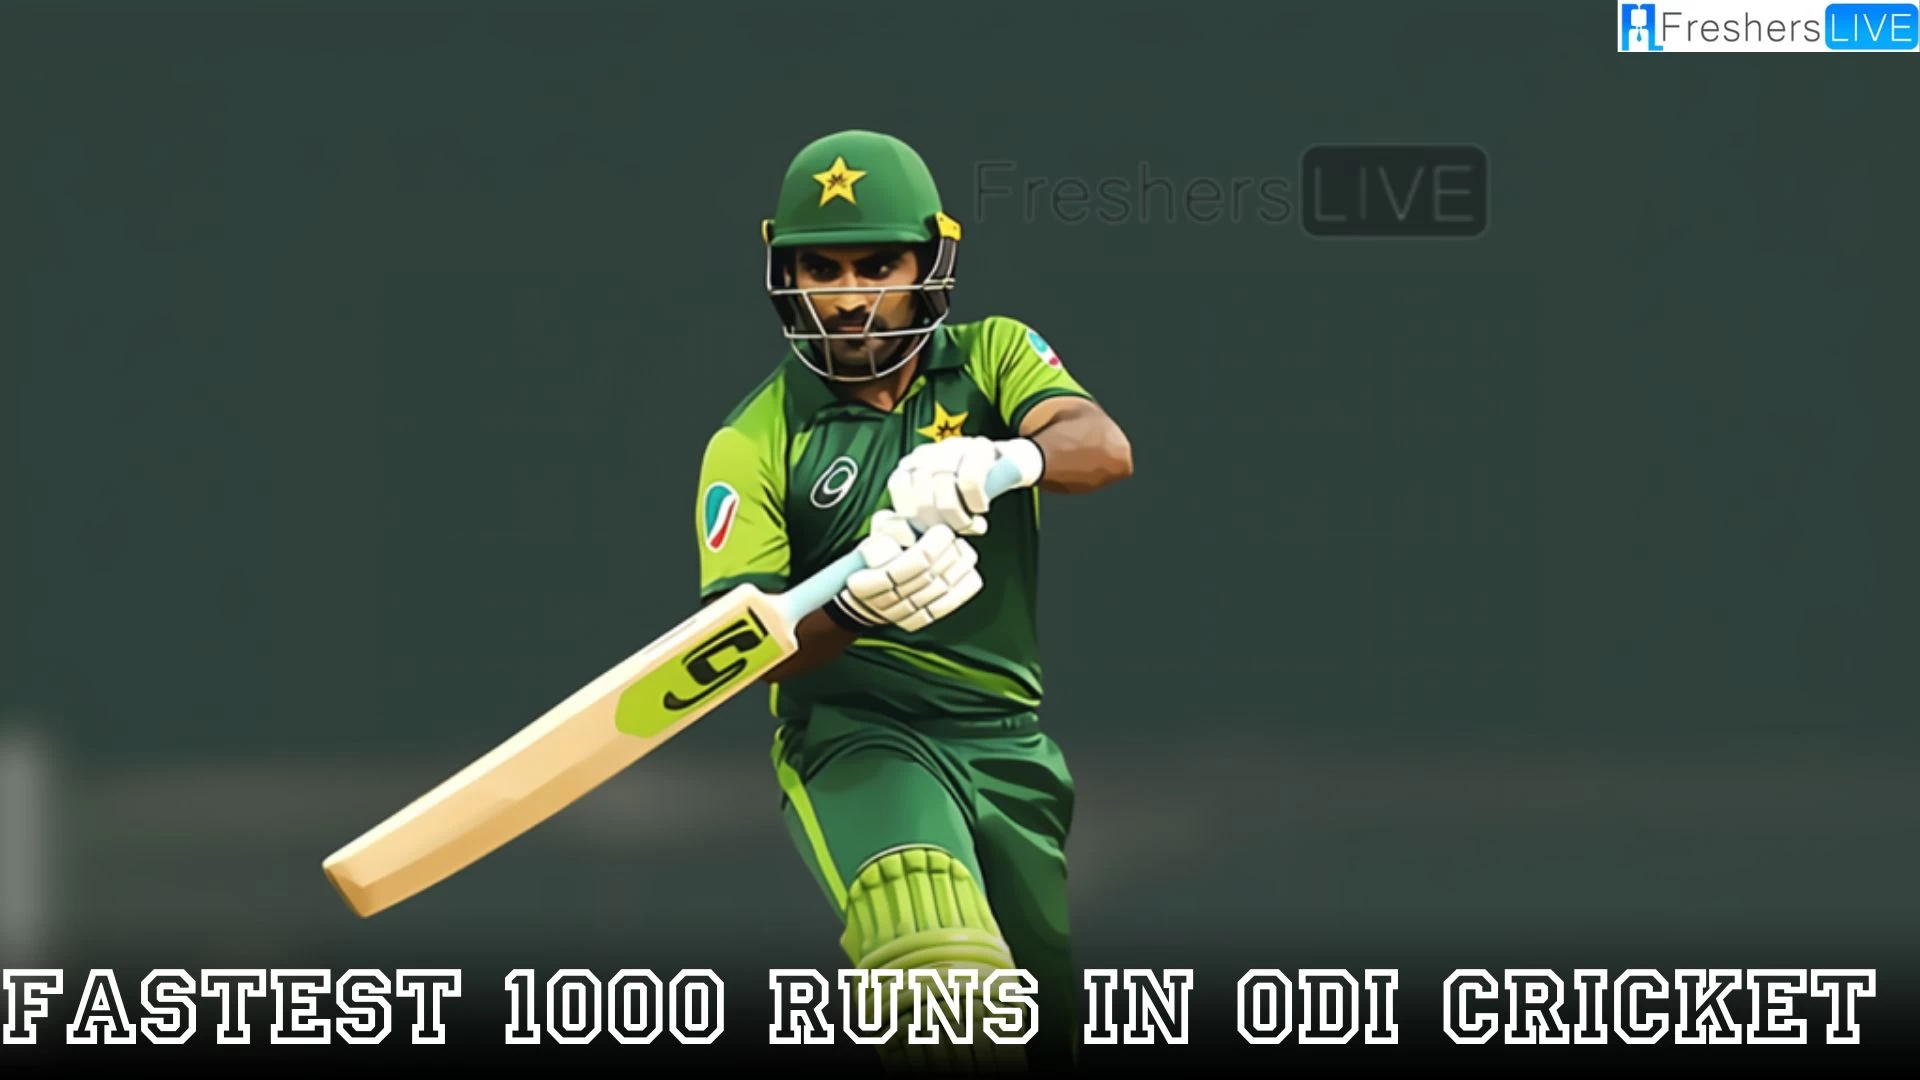 Fastest 1000 Runs in ODI Cricket - Top 10 Incredible Batting Display